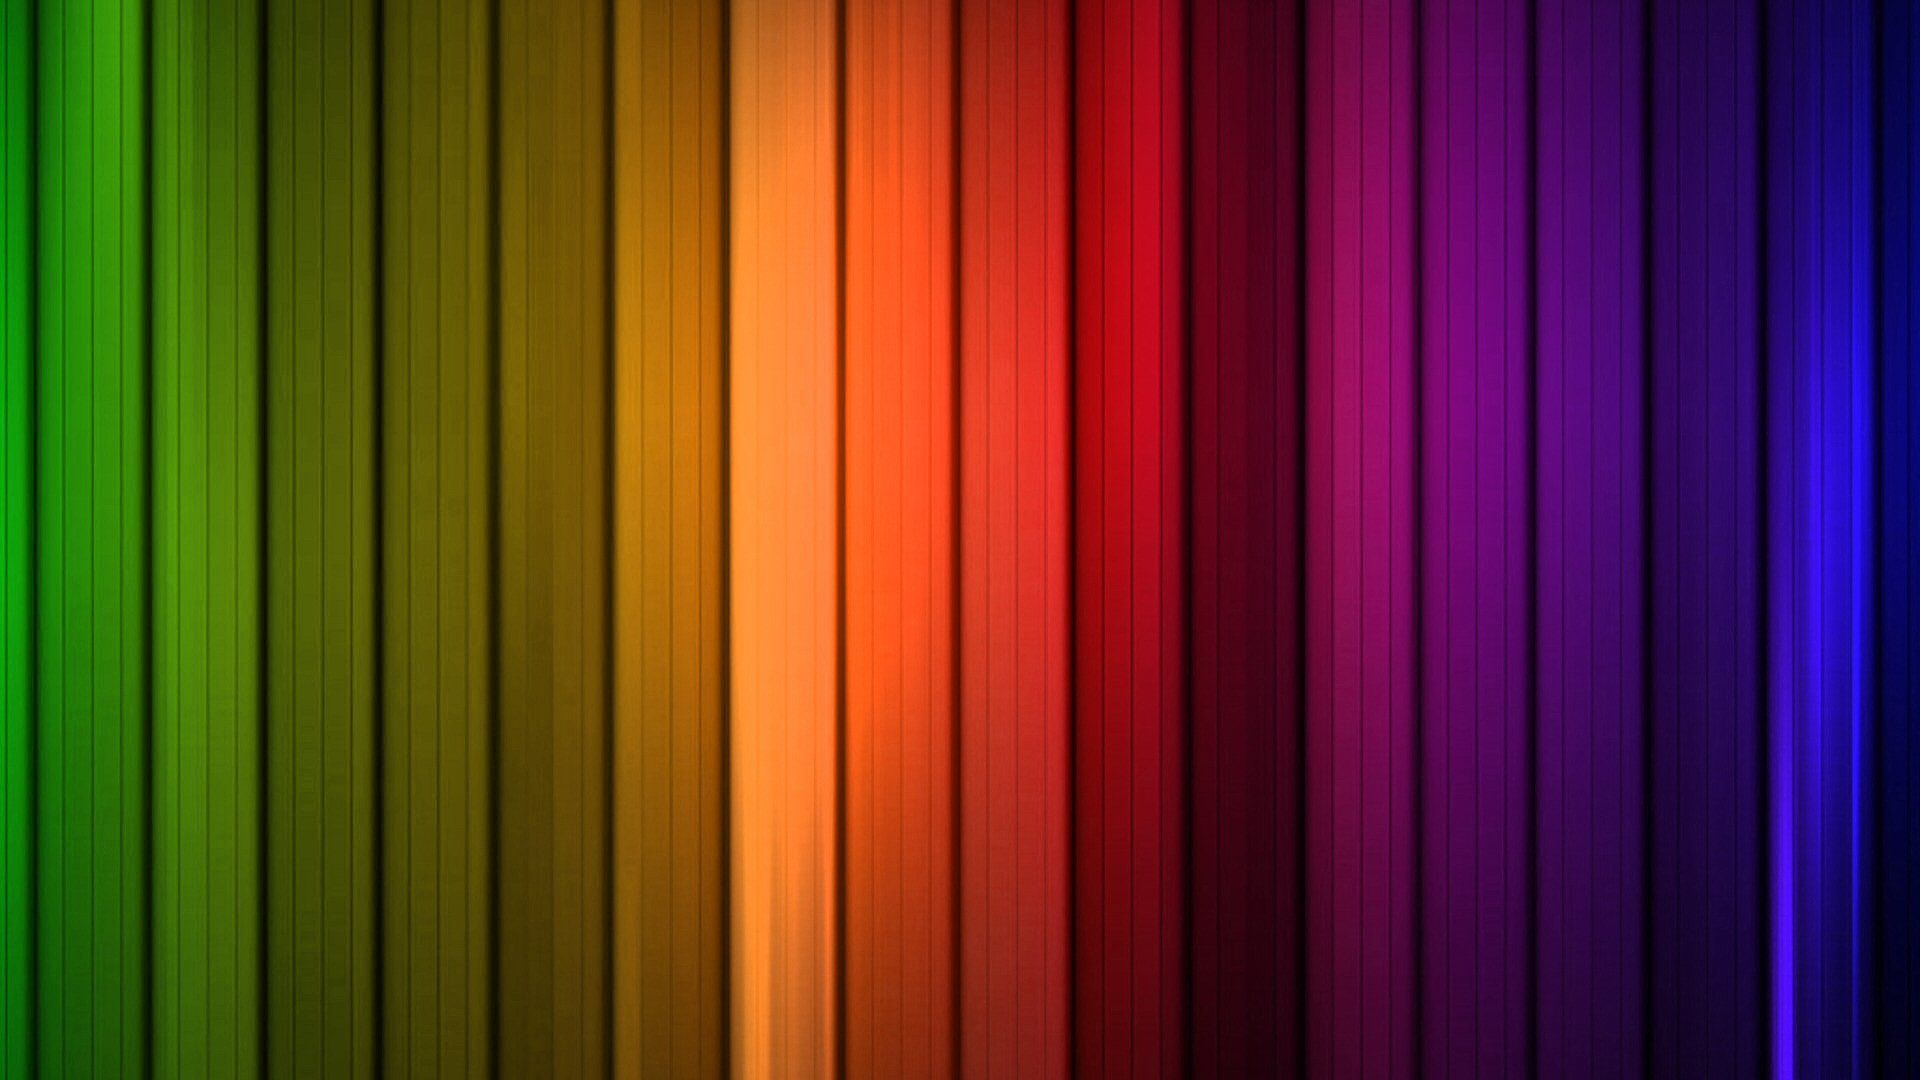 Adorable 45 Free Rainbow Image Full HD